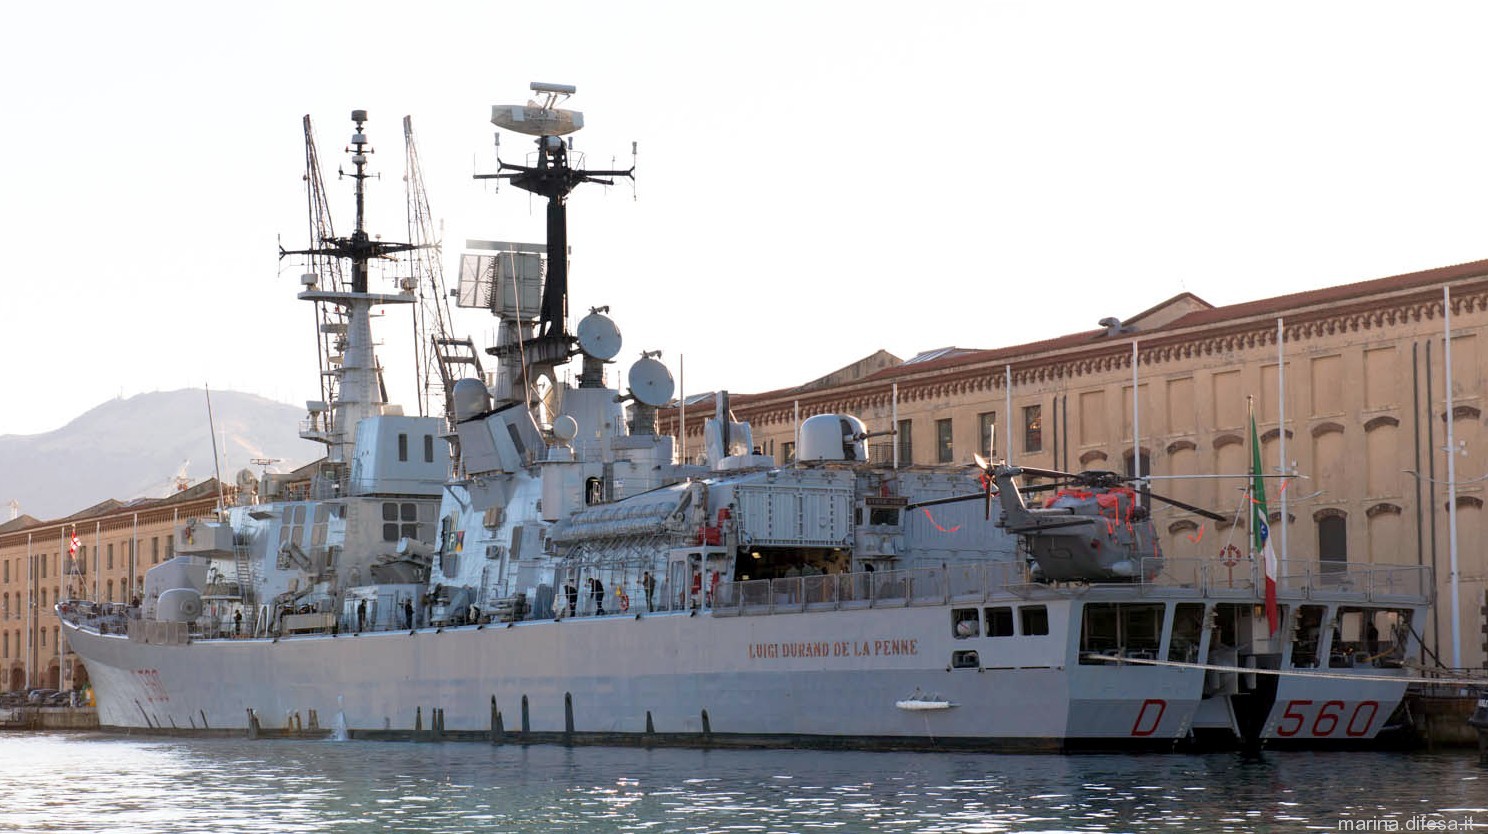 d-560 luigi durand de la penne its nave guided missile destroyer ddg italian navy marina militare 74